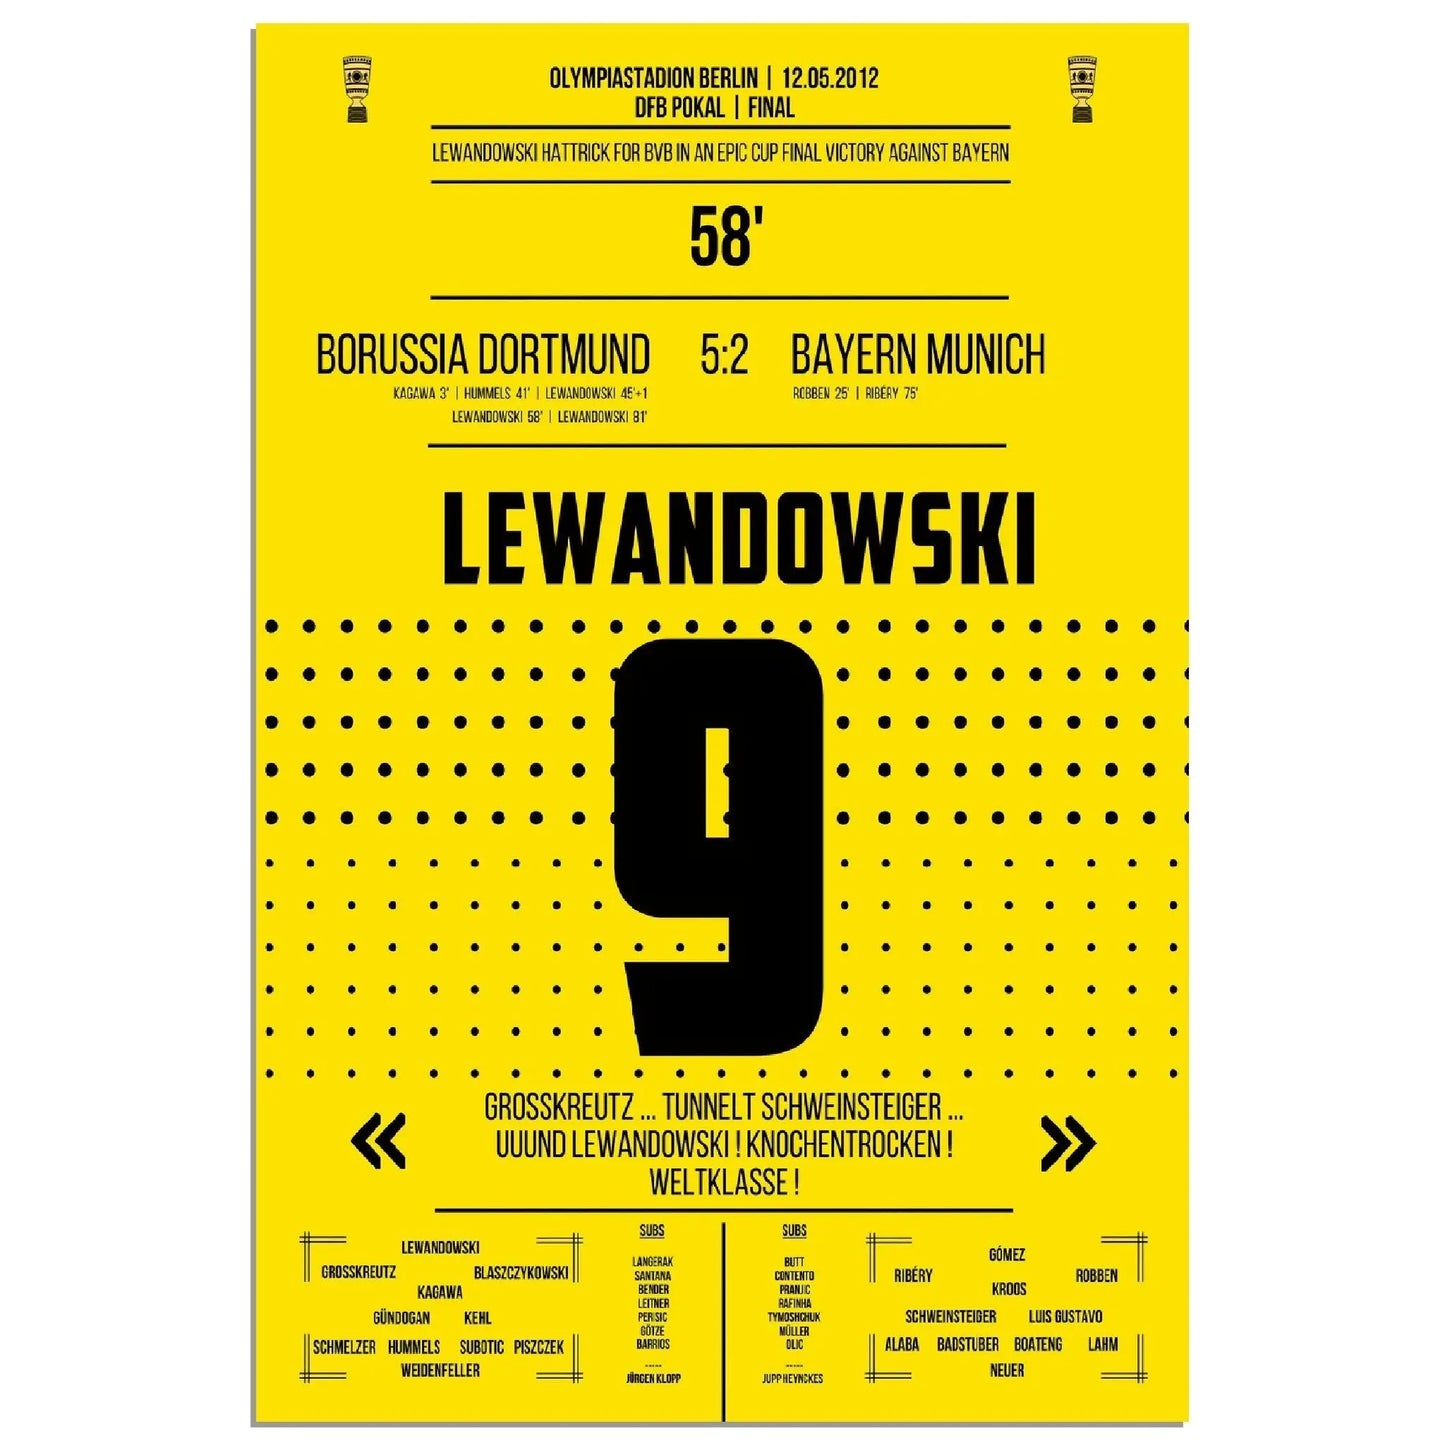 Lewandowski Hattrick im DFB Pokal Finale gegen Bayern 2012 